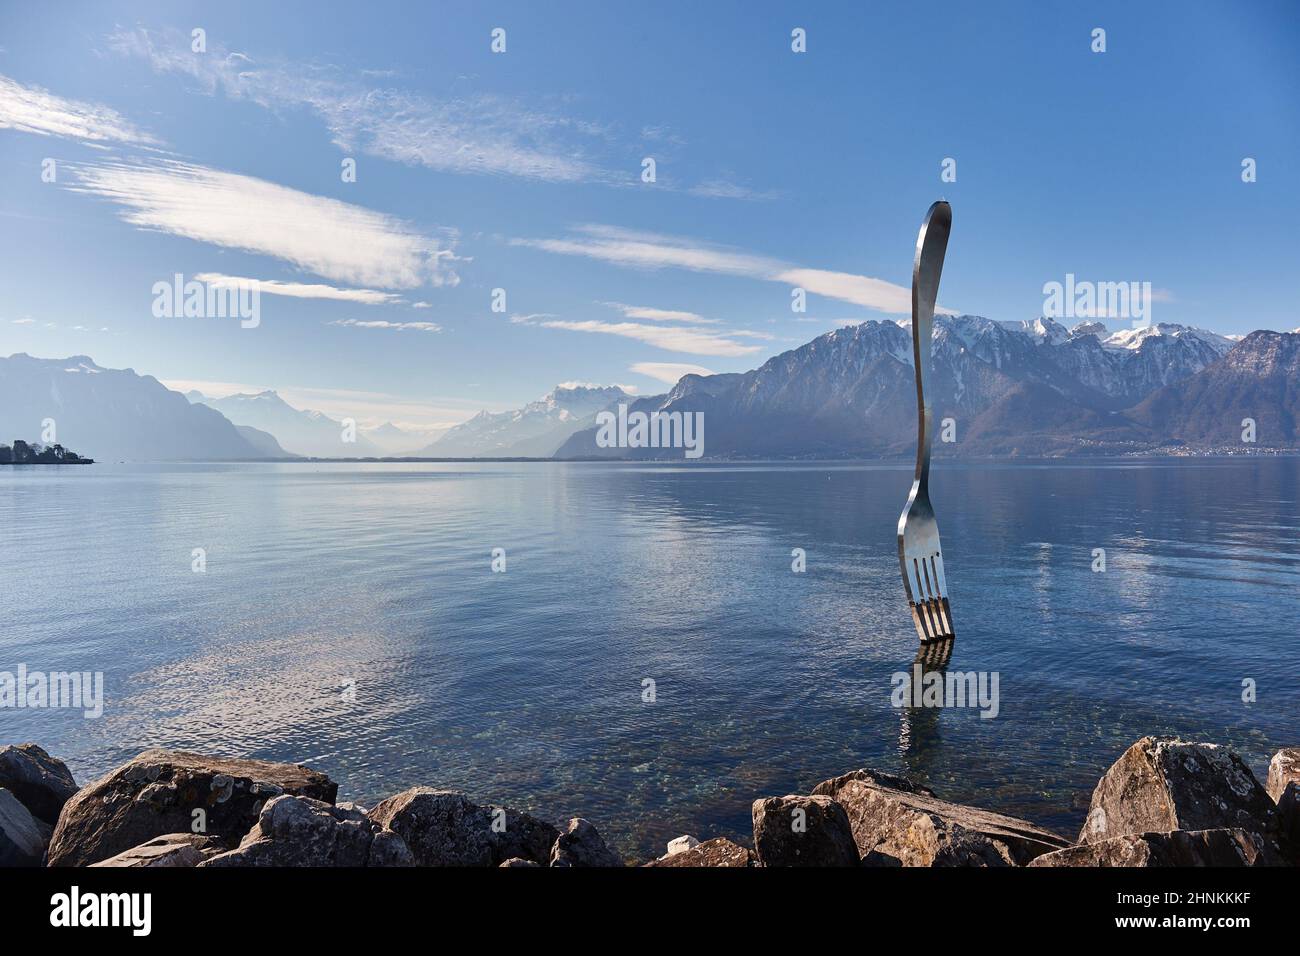 The Fork of Vevey in Lake Geneva, Switzerland Stock Photo